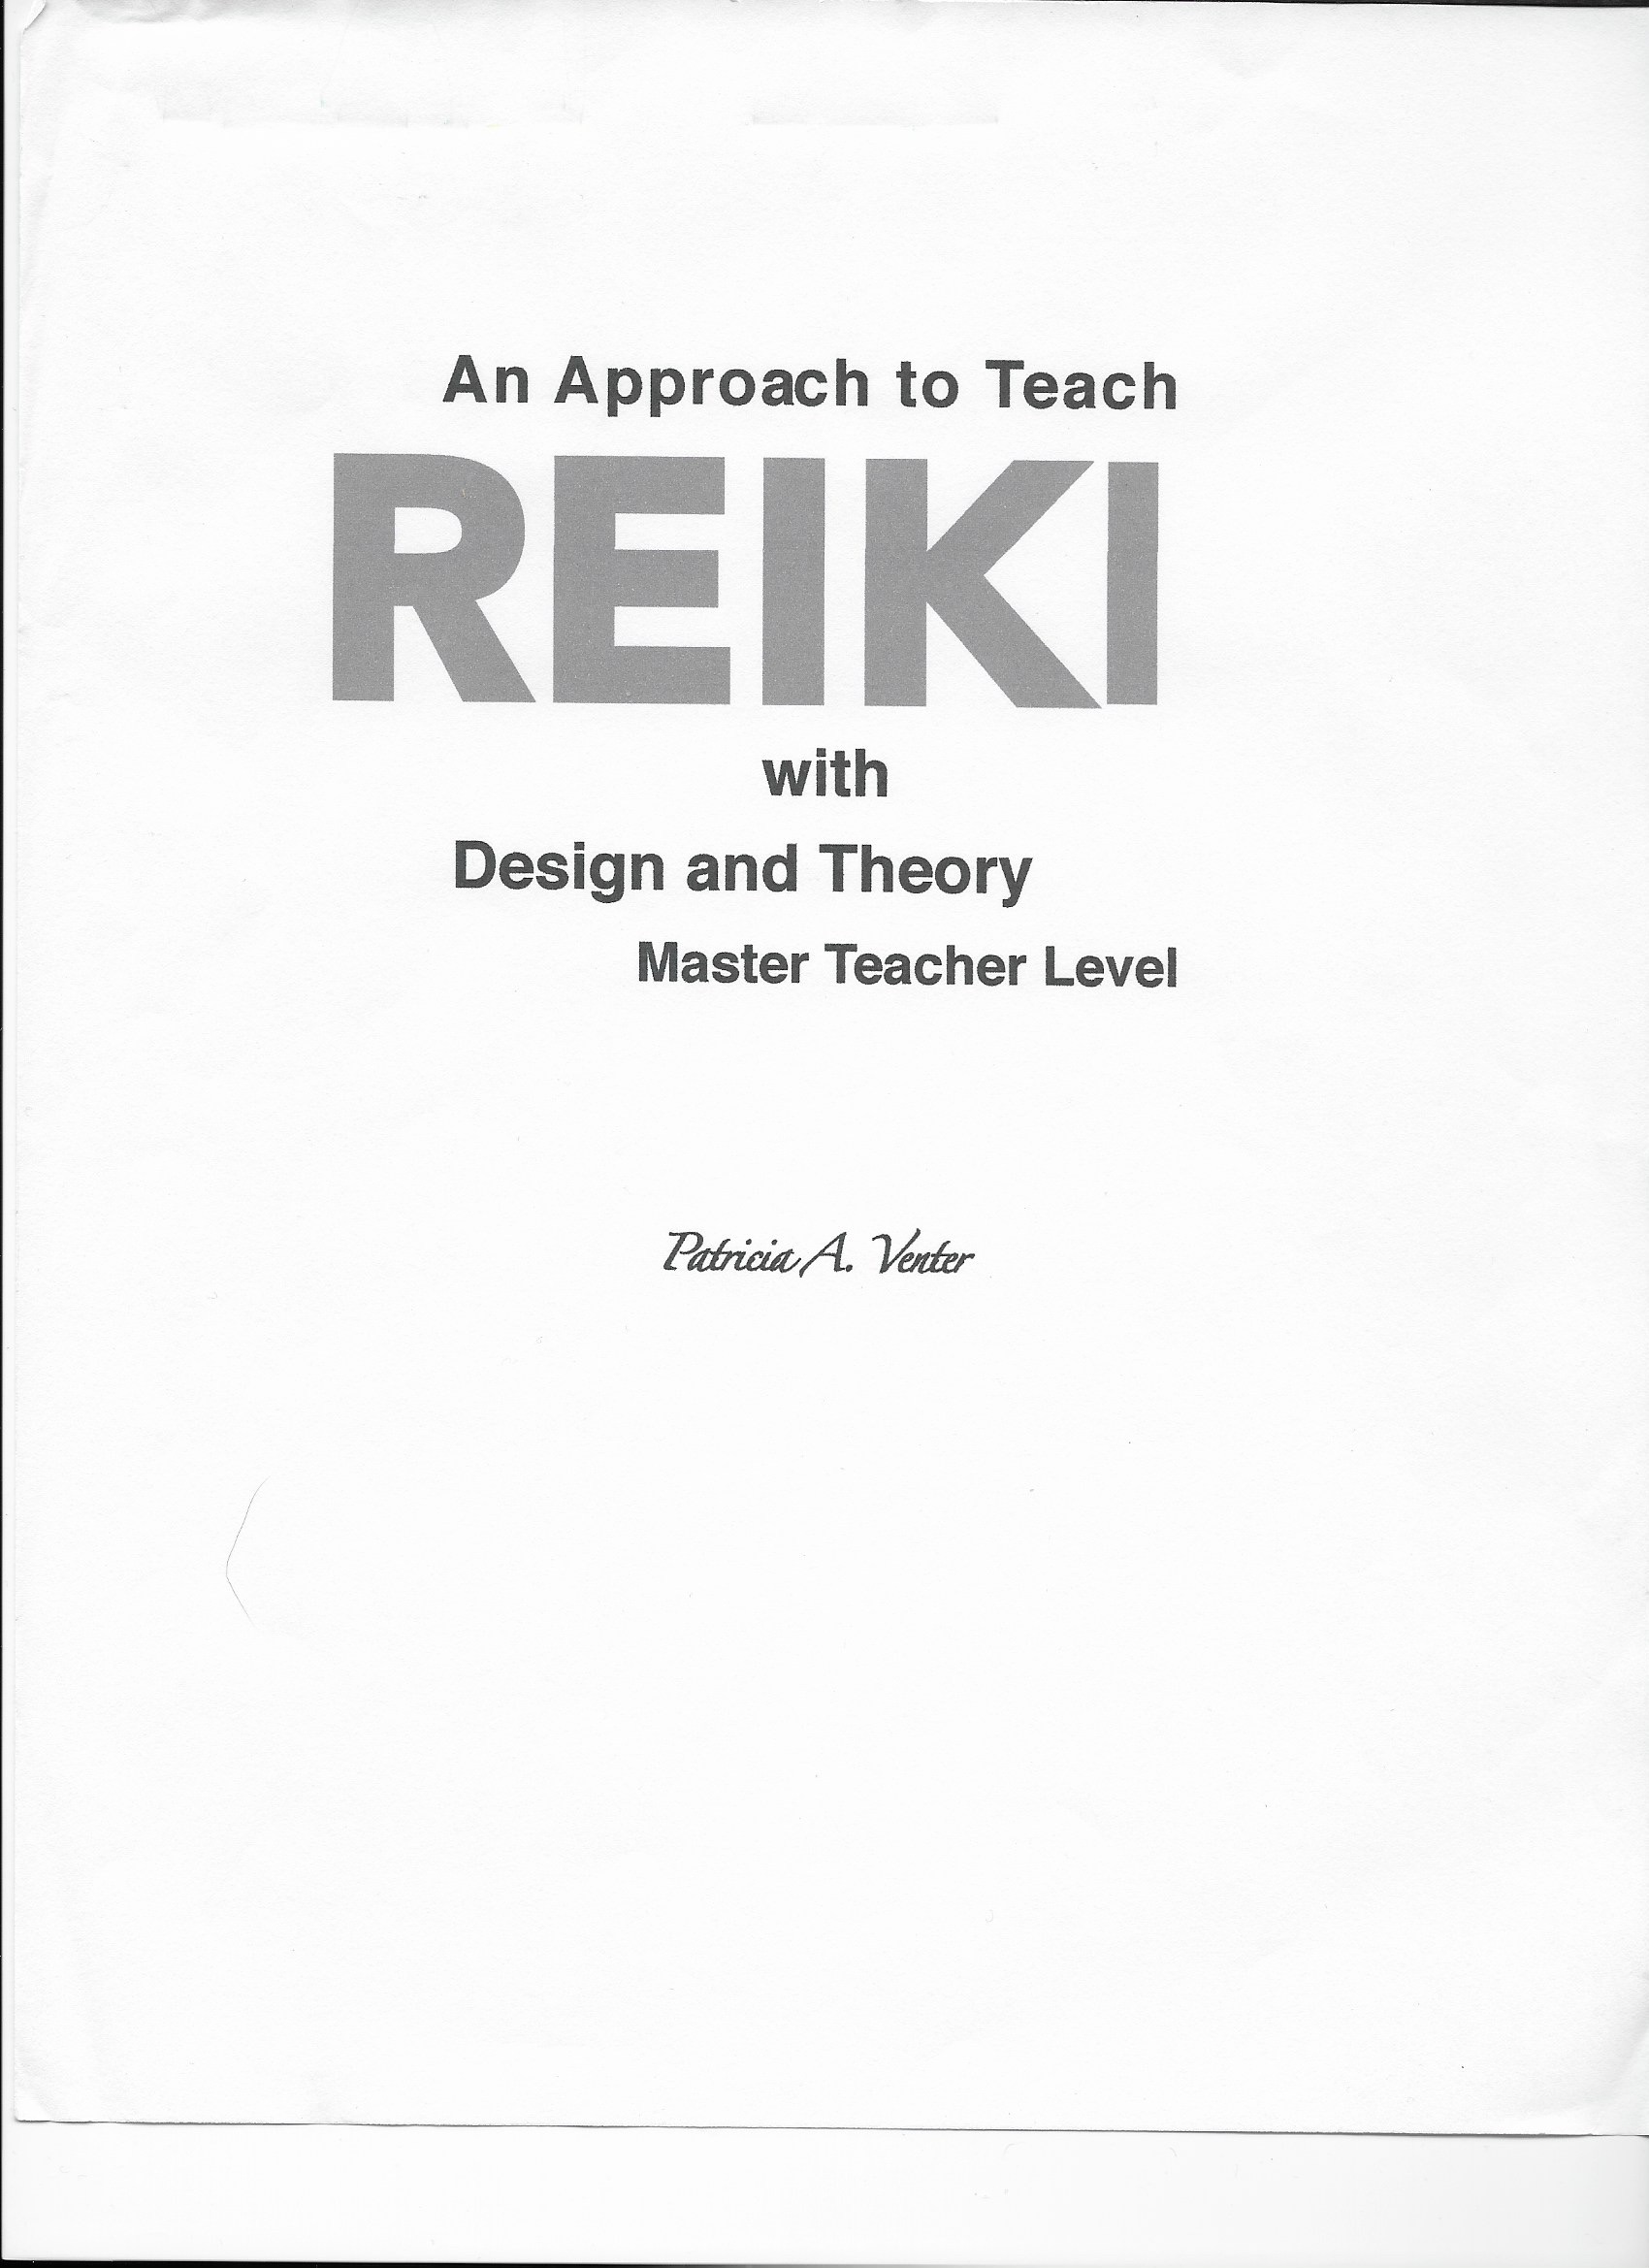 reiki-design-theory.jpg